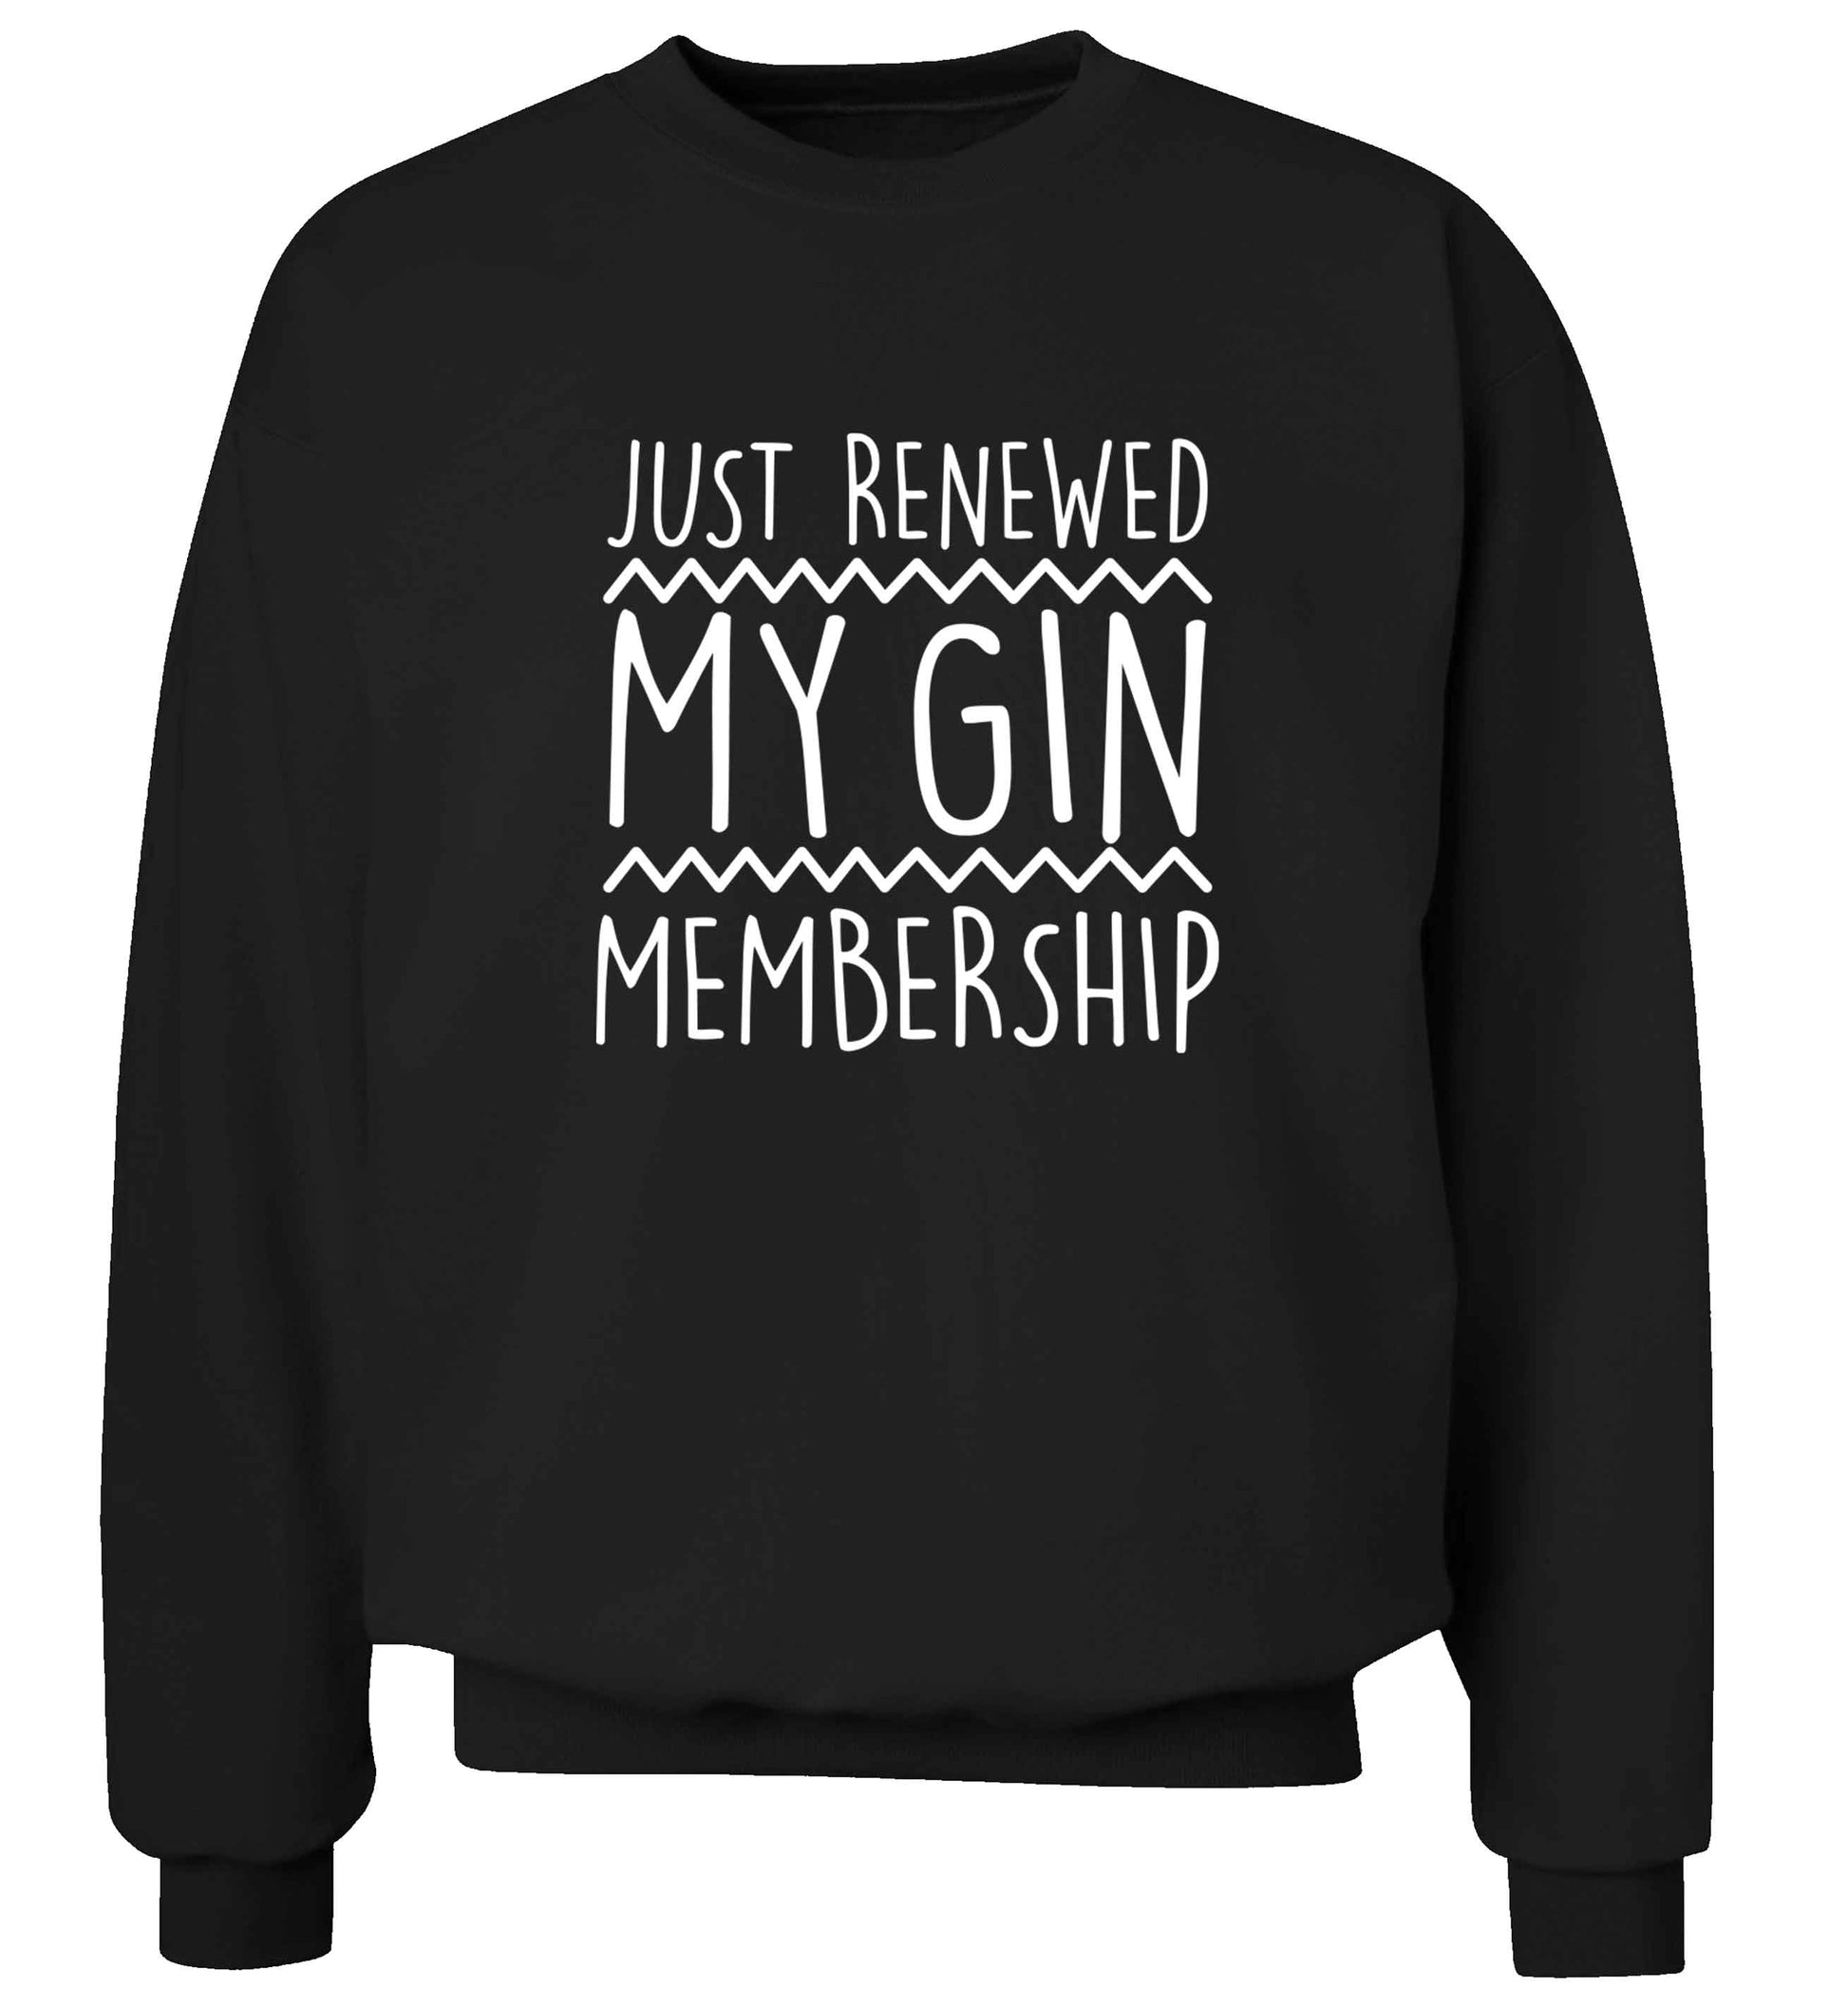 Just renewed my gin membership adult's unisex black sweater 2XL